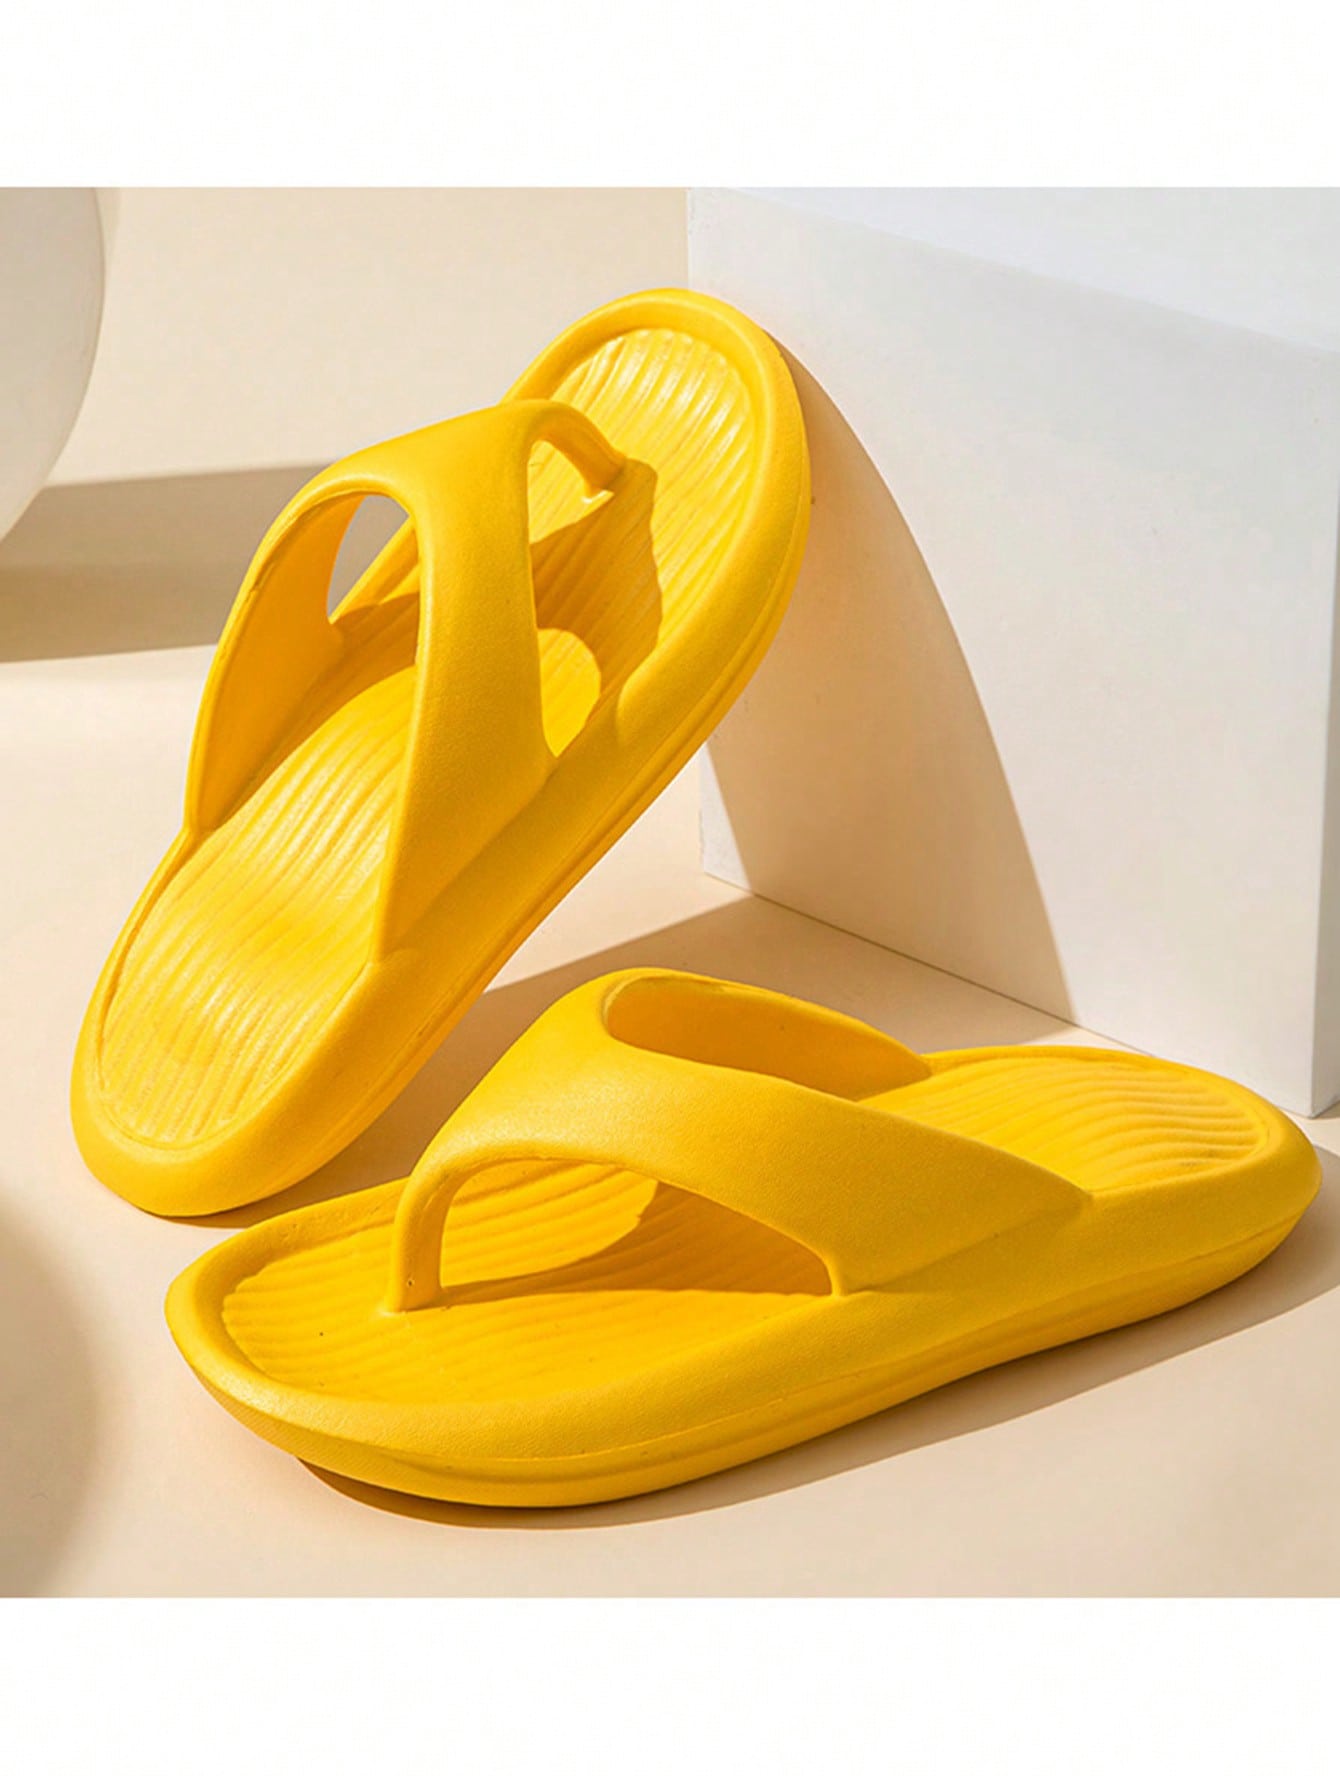 1pair Anti-Slip Thickened Soft Sole Women's Eva Flip-Flops With Toe Separator, Beach Sandals For Bathroom-Yellow-2